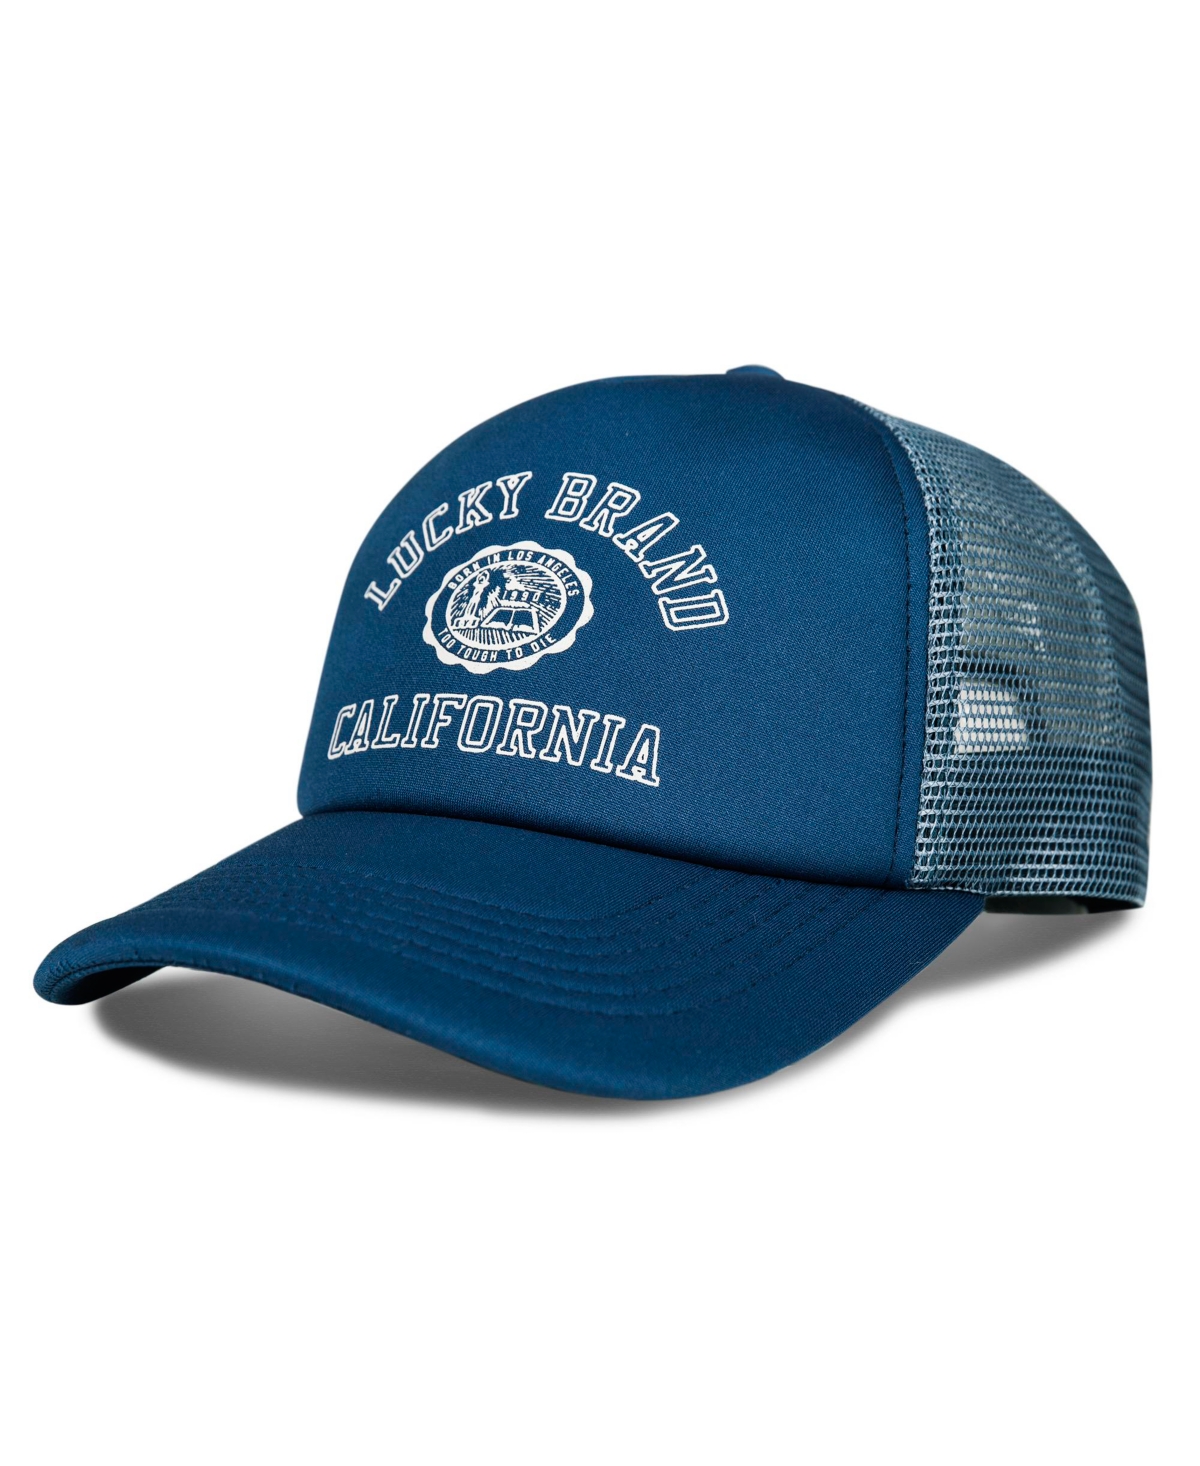 Women's Collegiate Trucker Hat - Blue